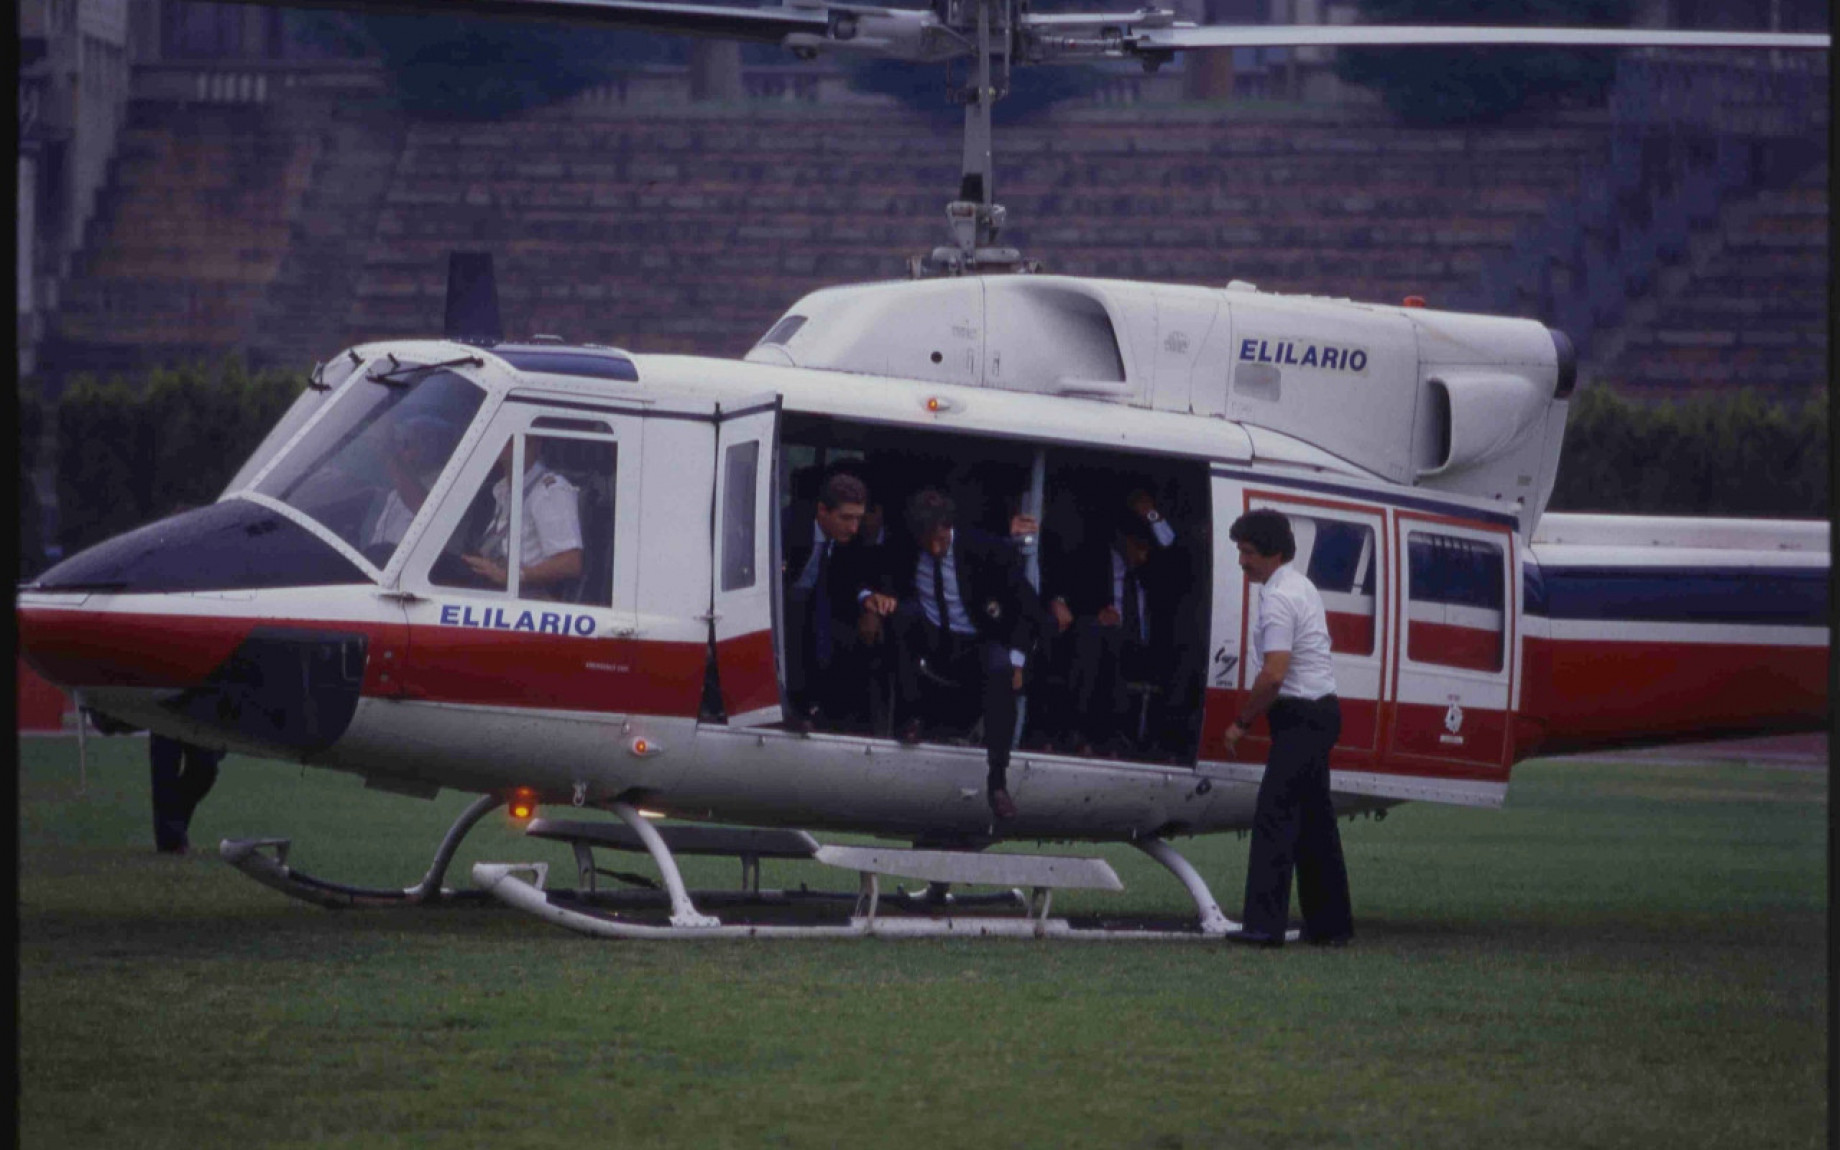 milan-elicottero-berlusconi-baresi-1986-getty-1280x801.jpg